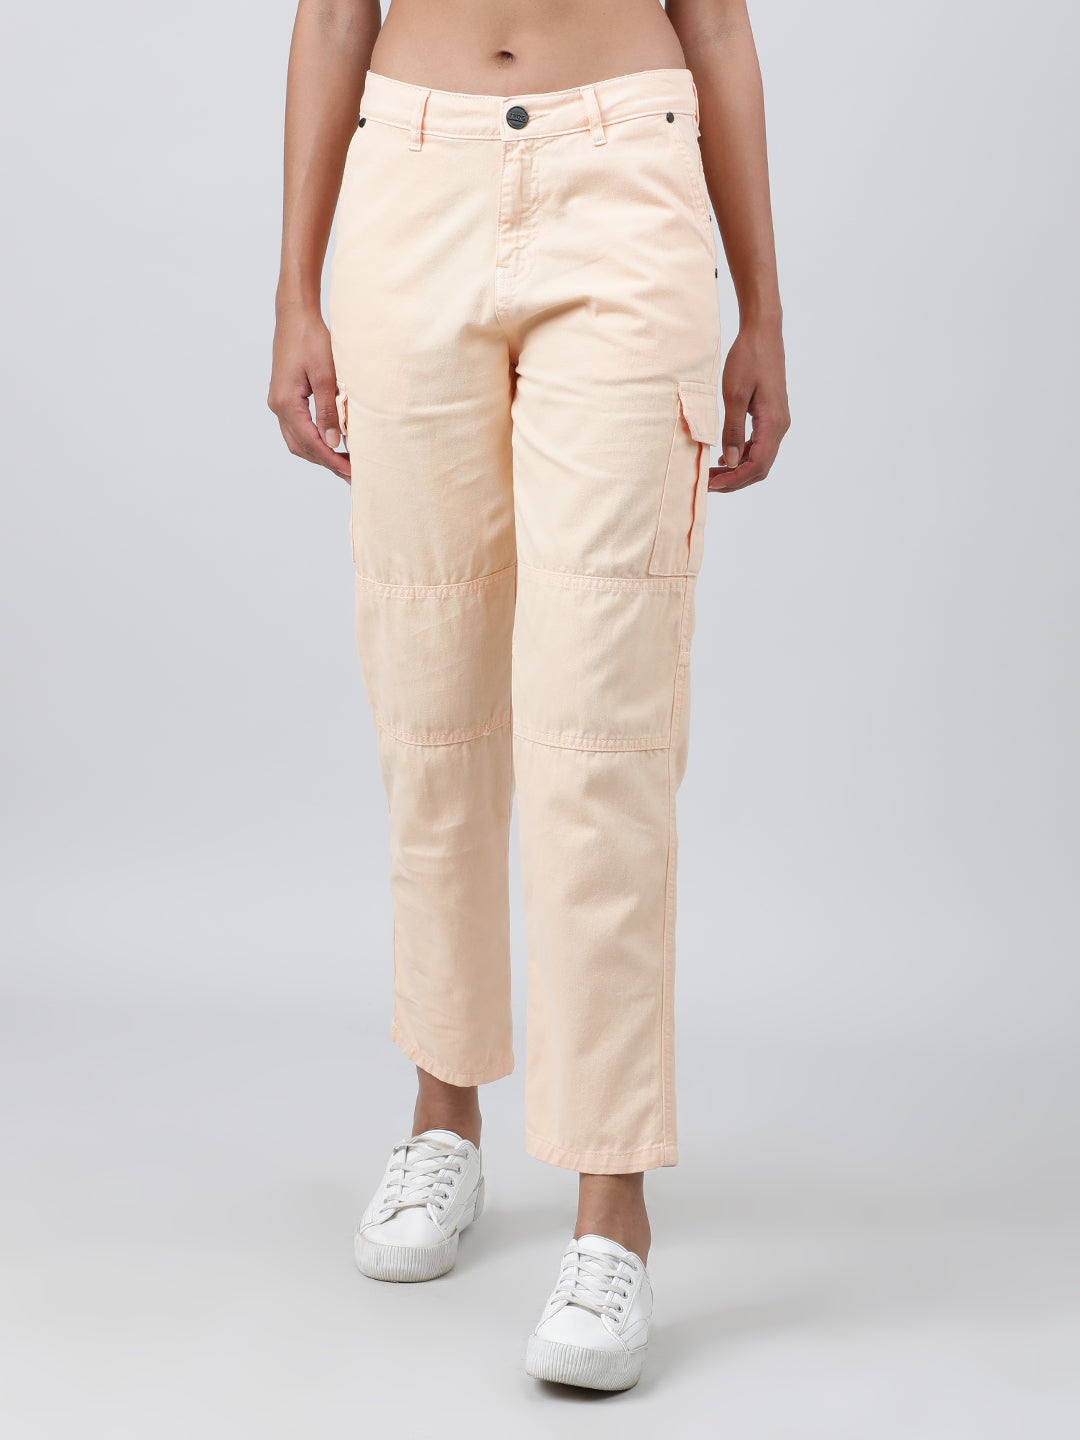 Military cargo pants women Army high waist loose Multi-pocket Pant  versatile cotton Trousers ladies Street Jogger sweatpants new - AliExpress